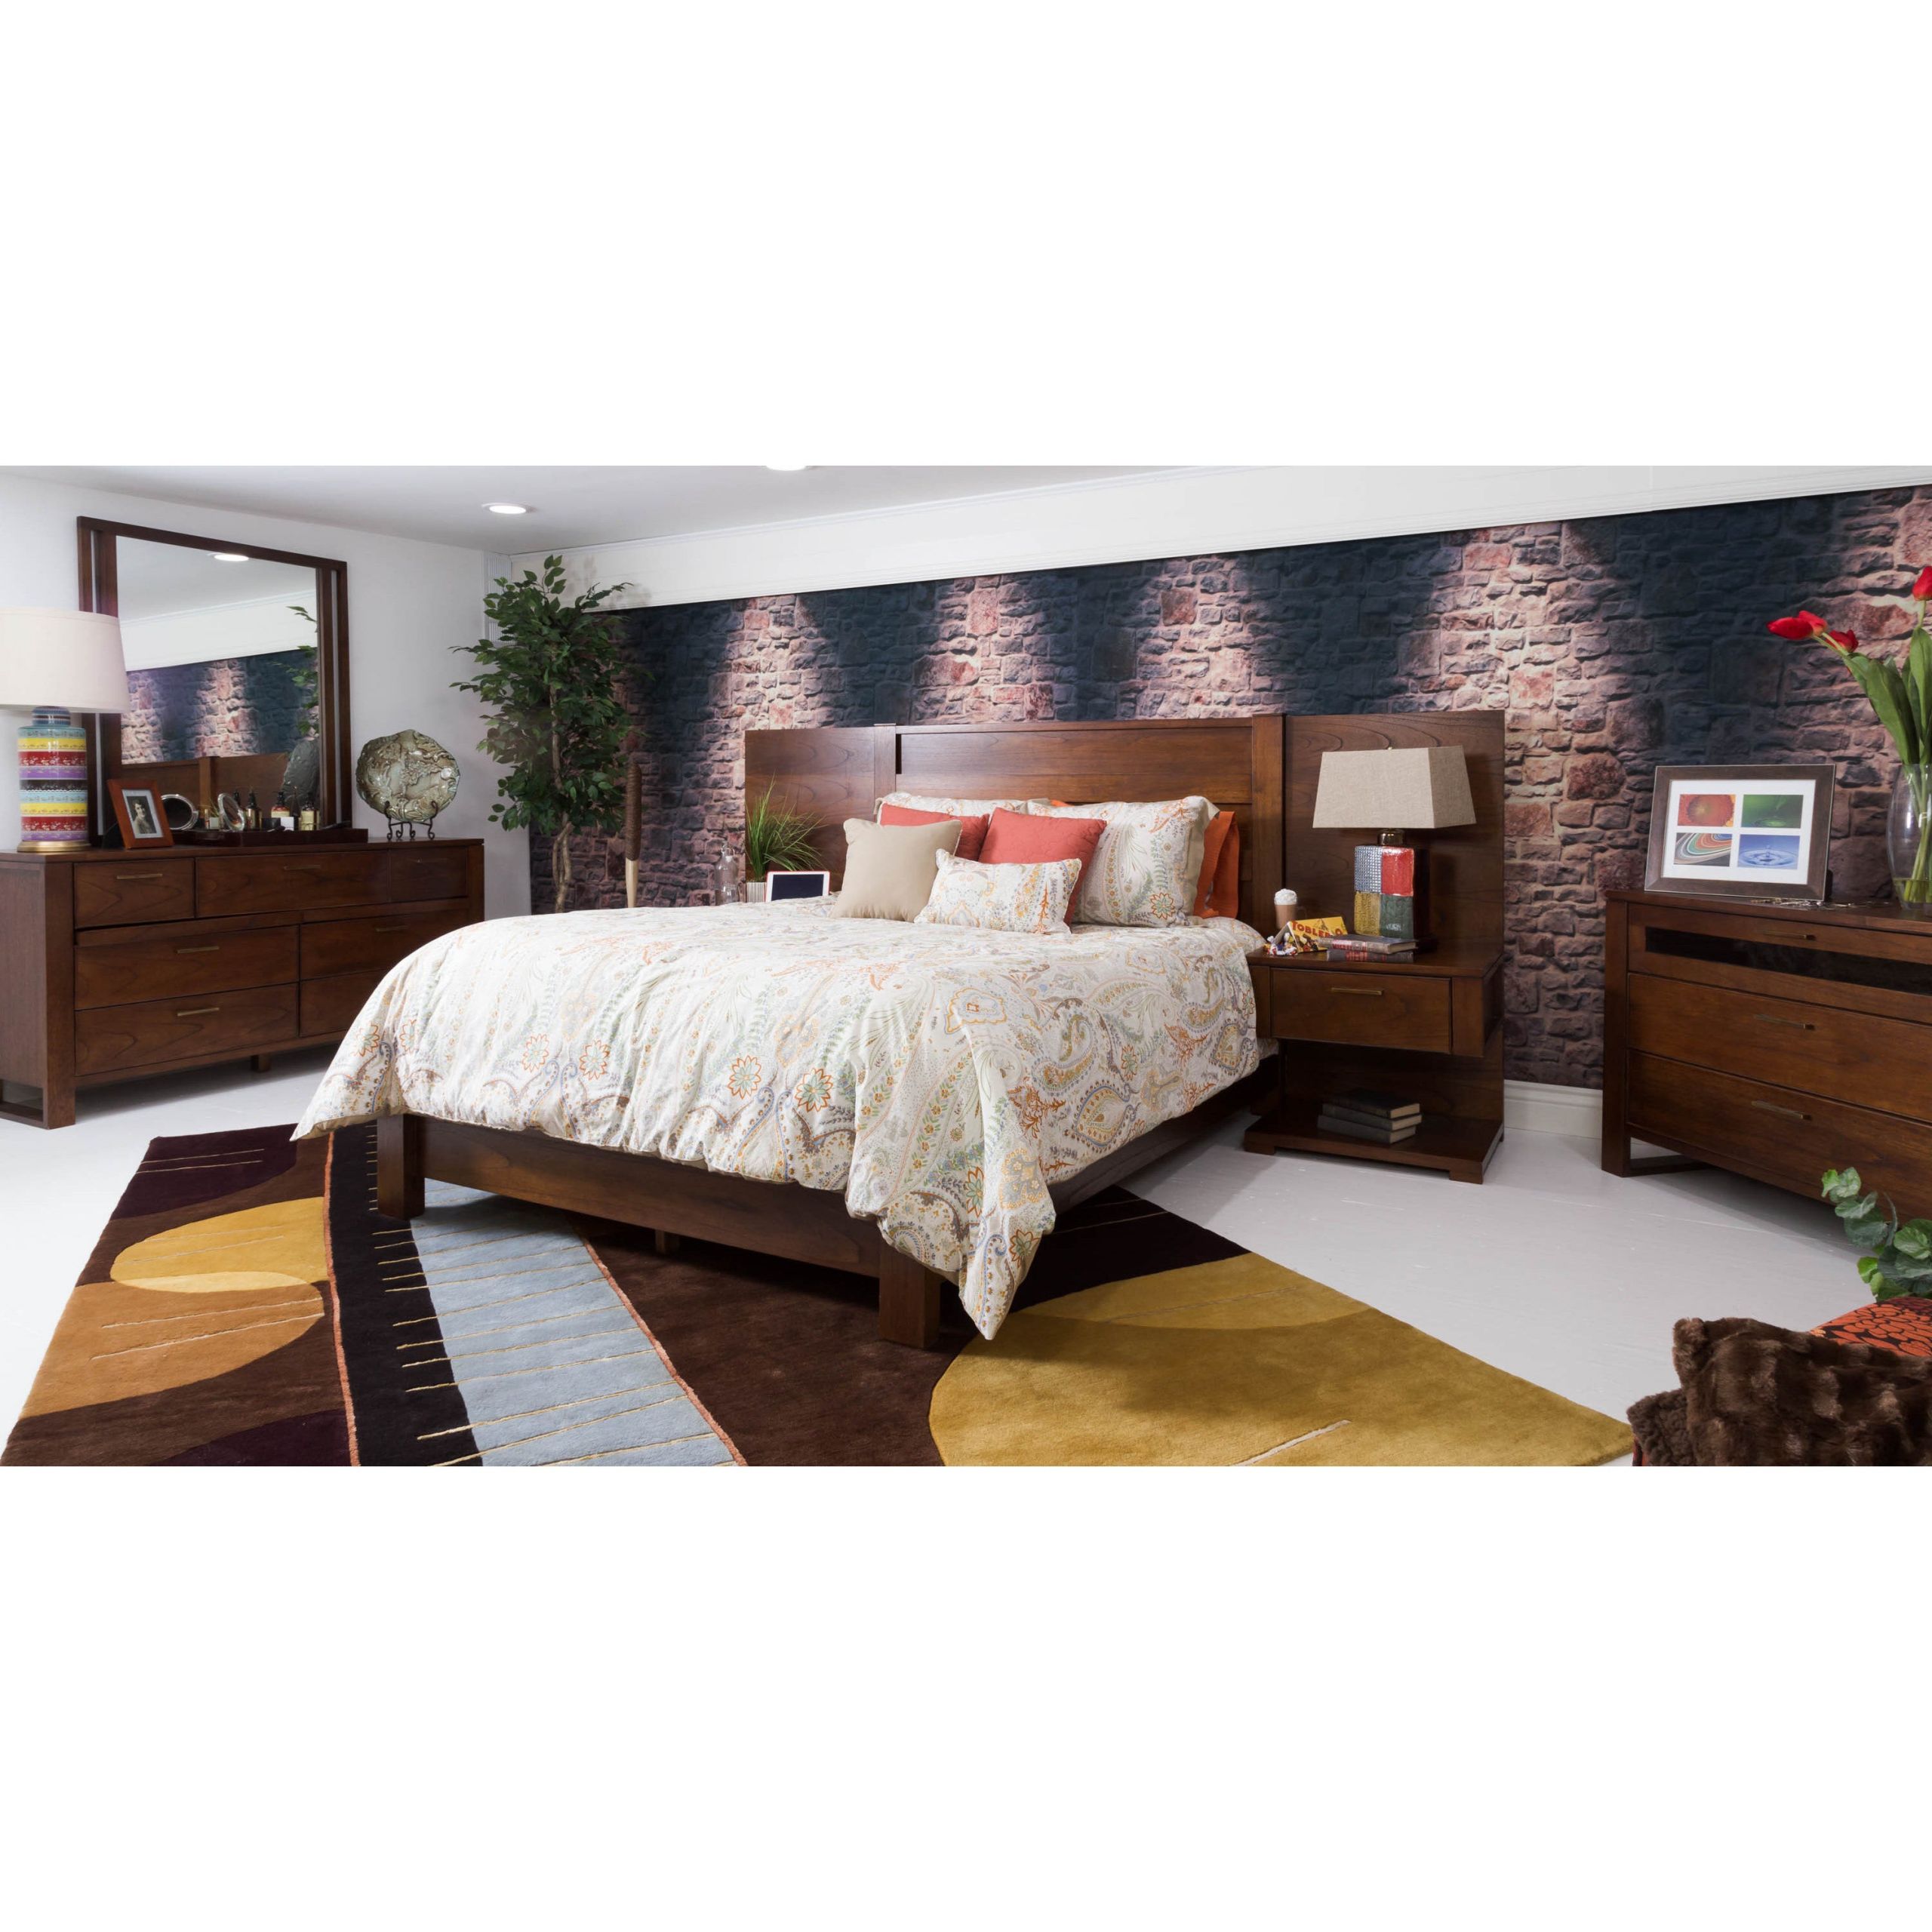 Wall Unit Bedroom Sets
 Somette Wyatt Honey Queen Bed with Wall Unit 2 Nightstands